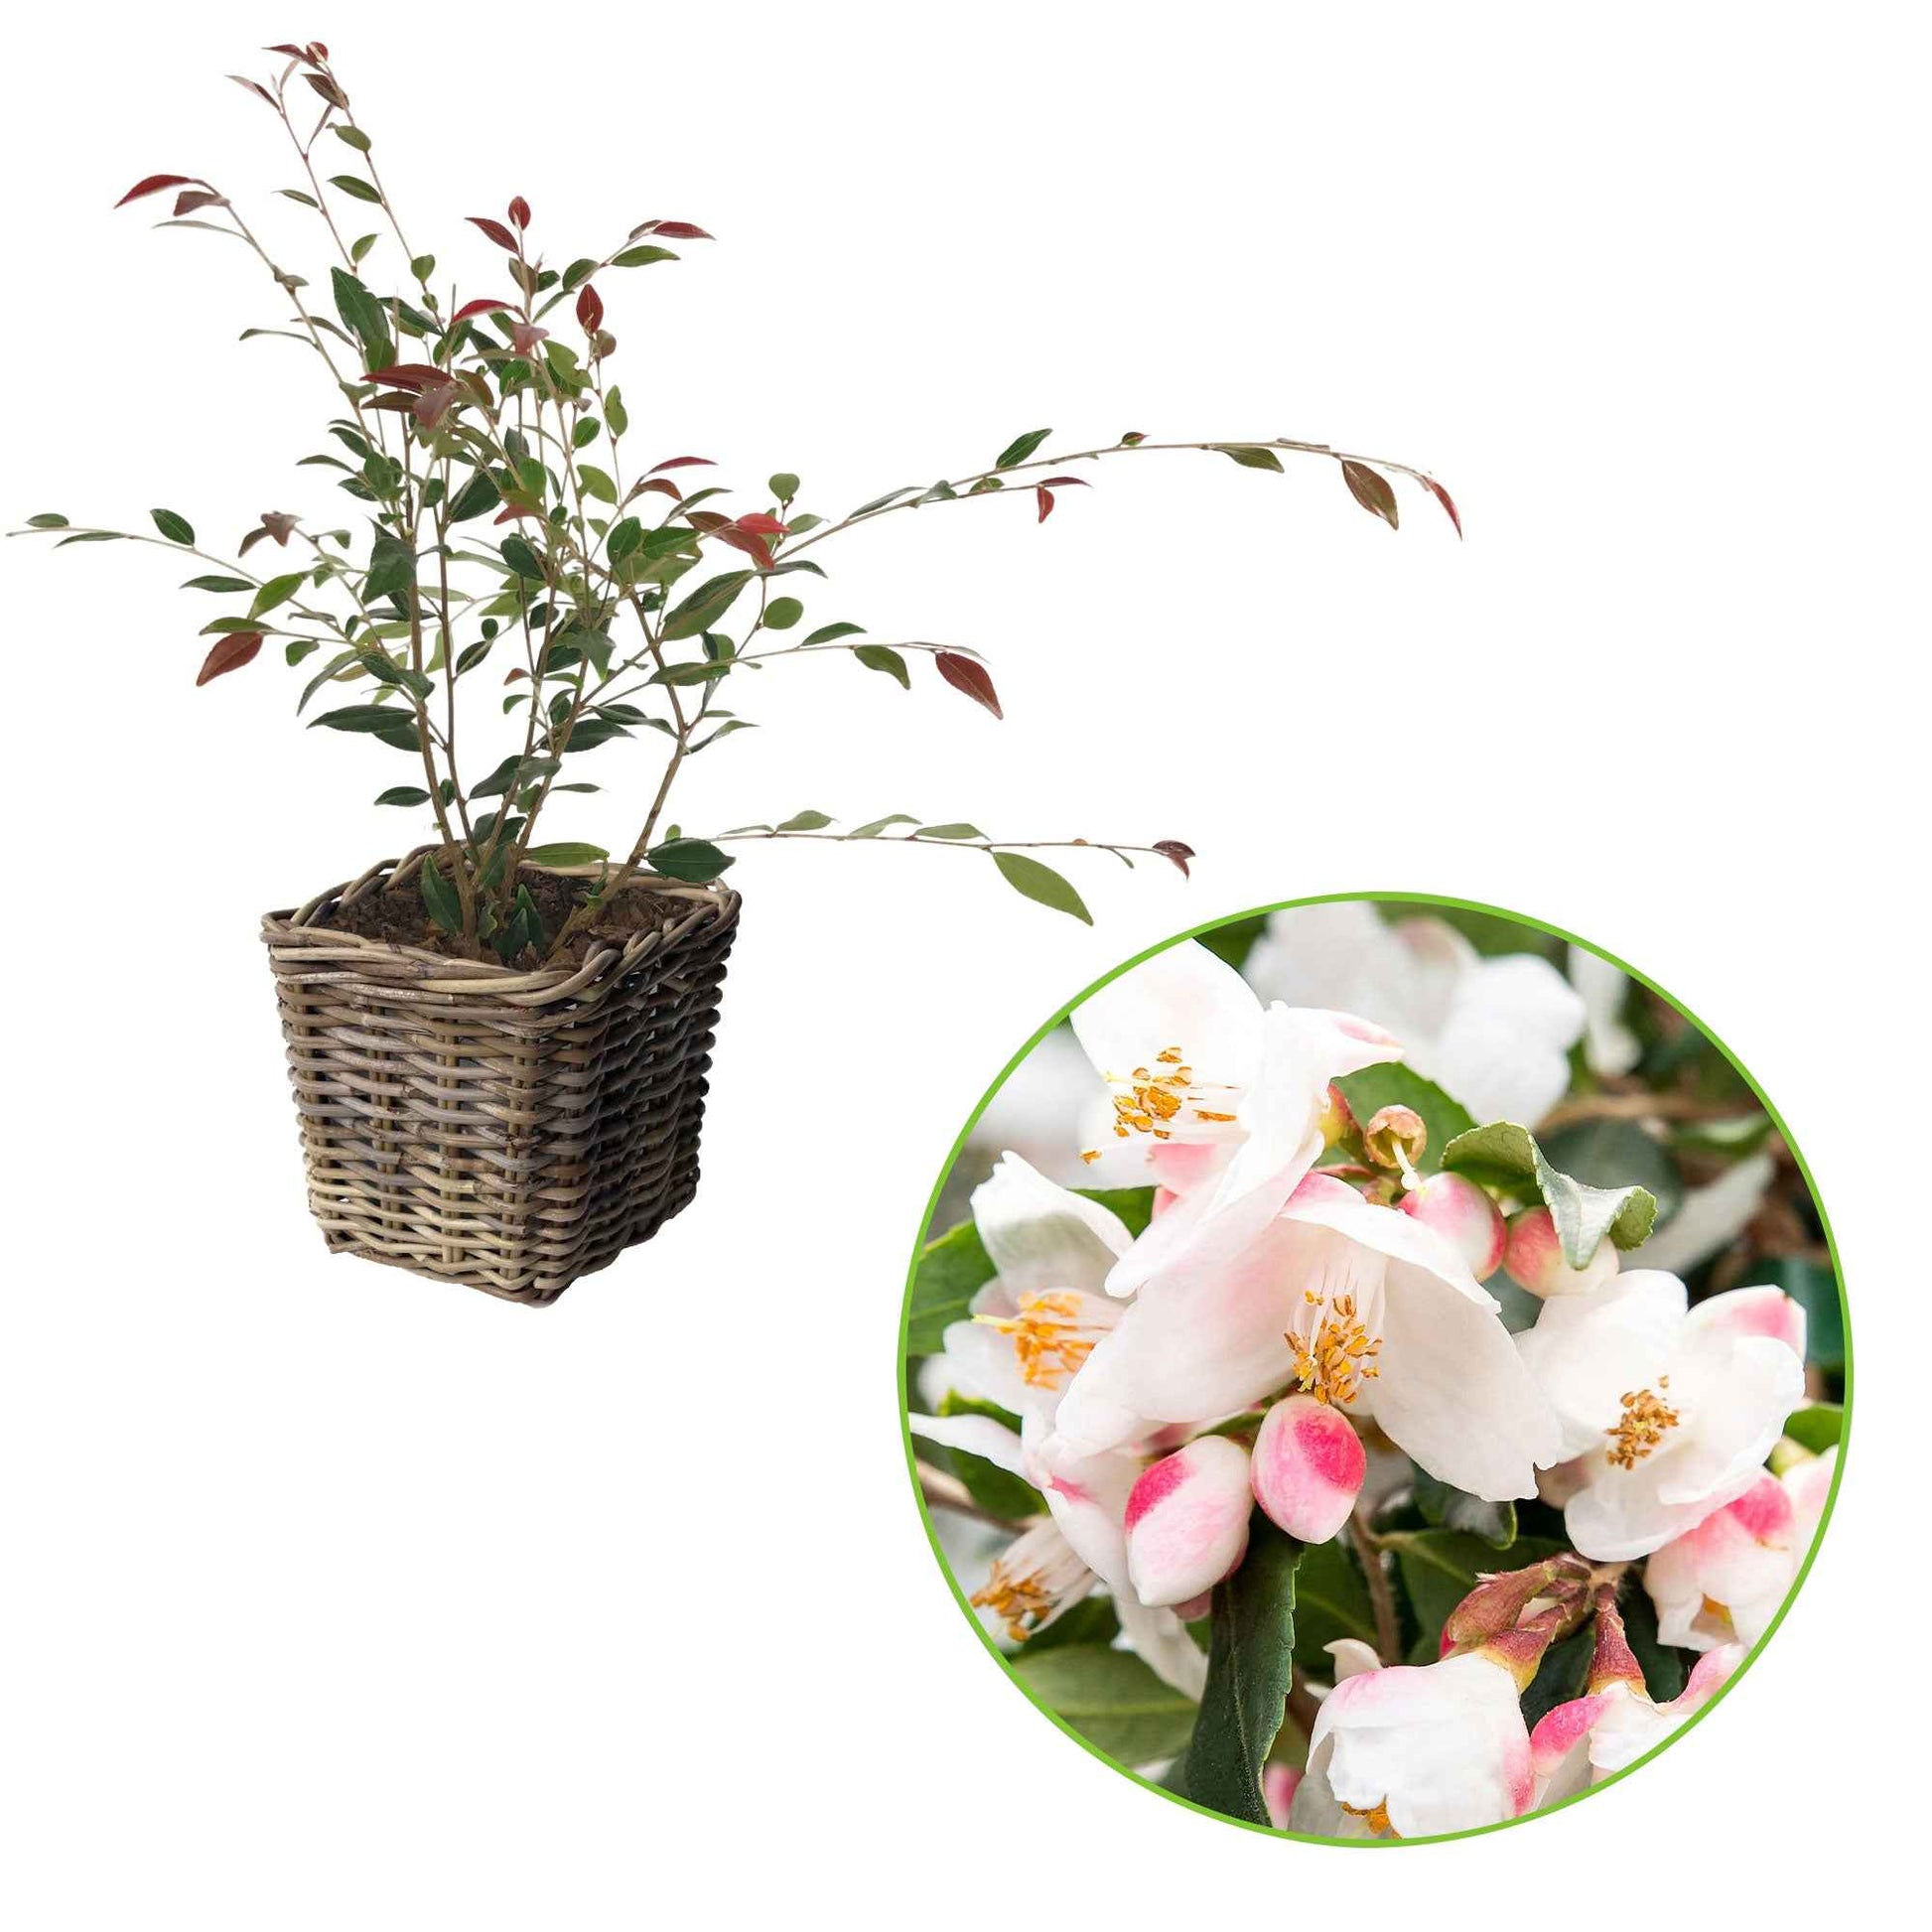 Kamelie Camellia 'Cupido' weiβ inkl. Korb - Winterhart - Immergrüne Sträucher